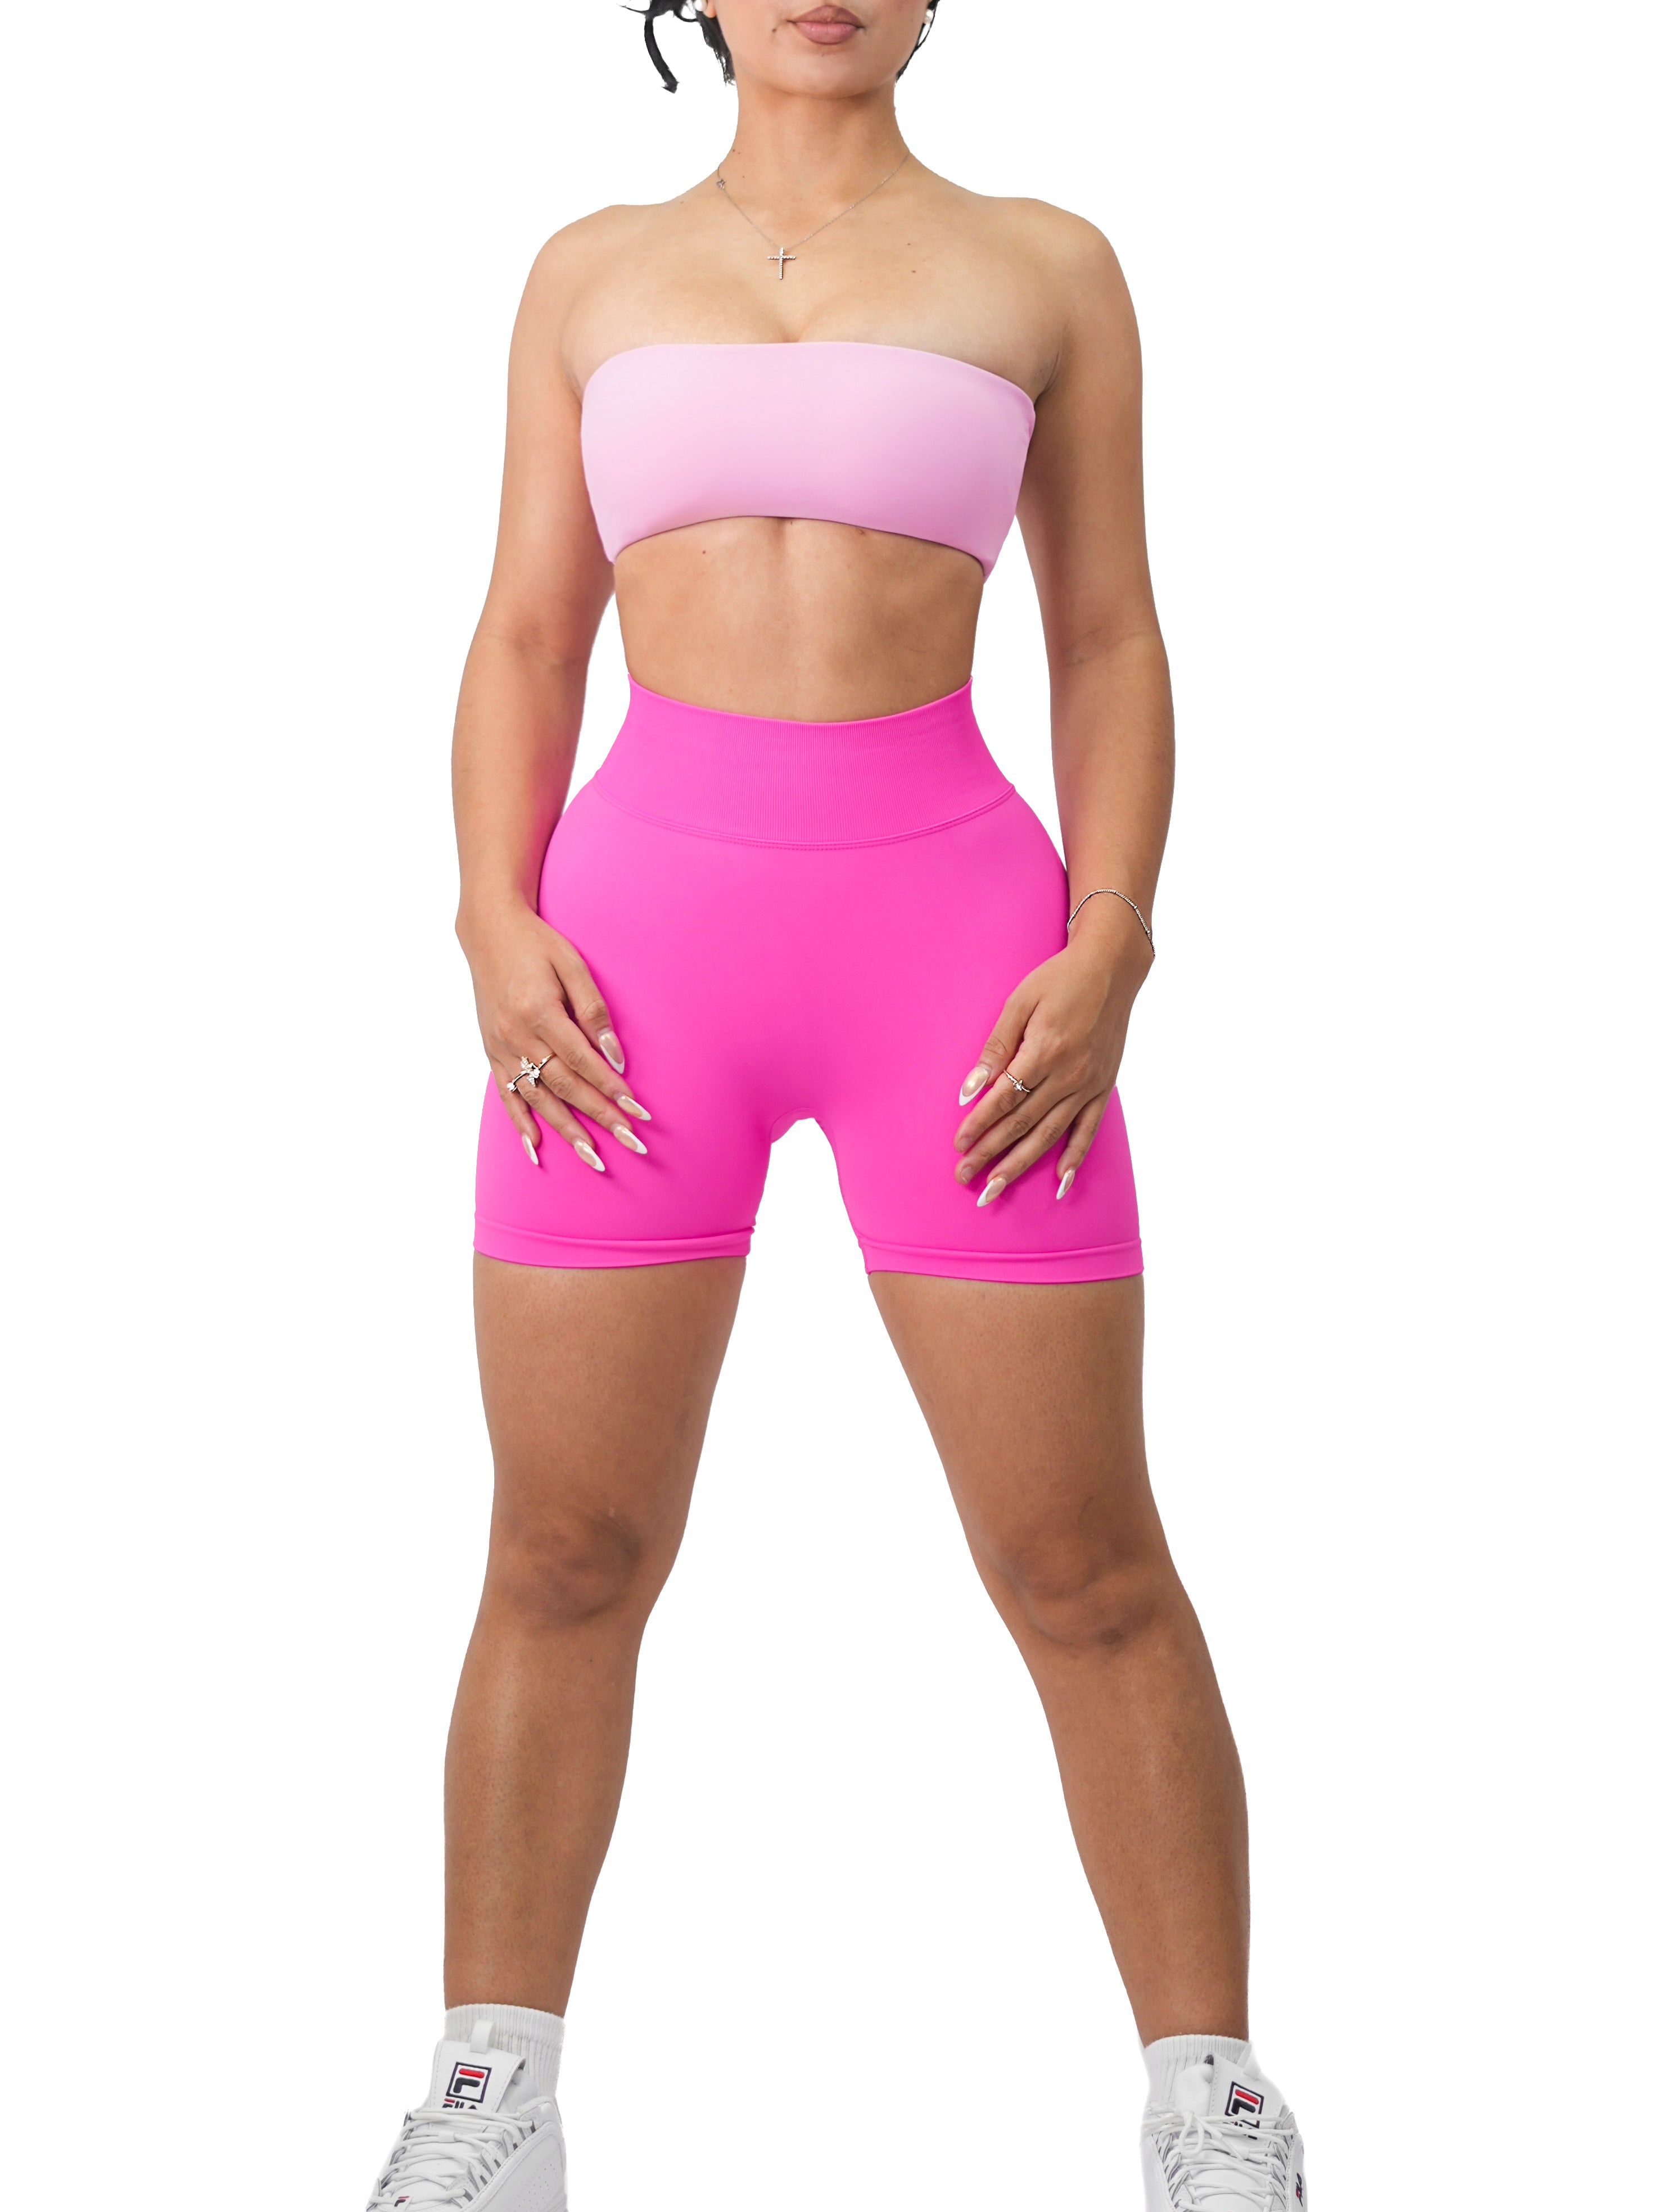 Athletic Seamless Shorts (Hot Pink)